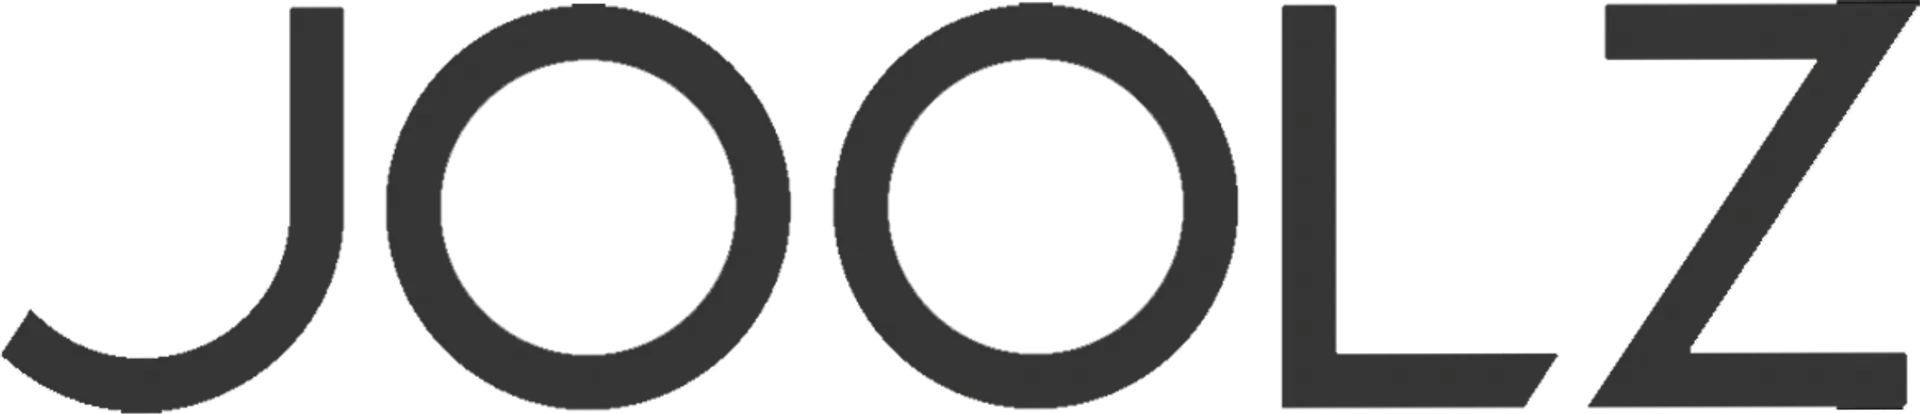 JOOLZ logo